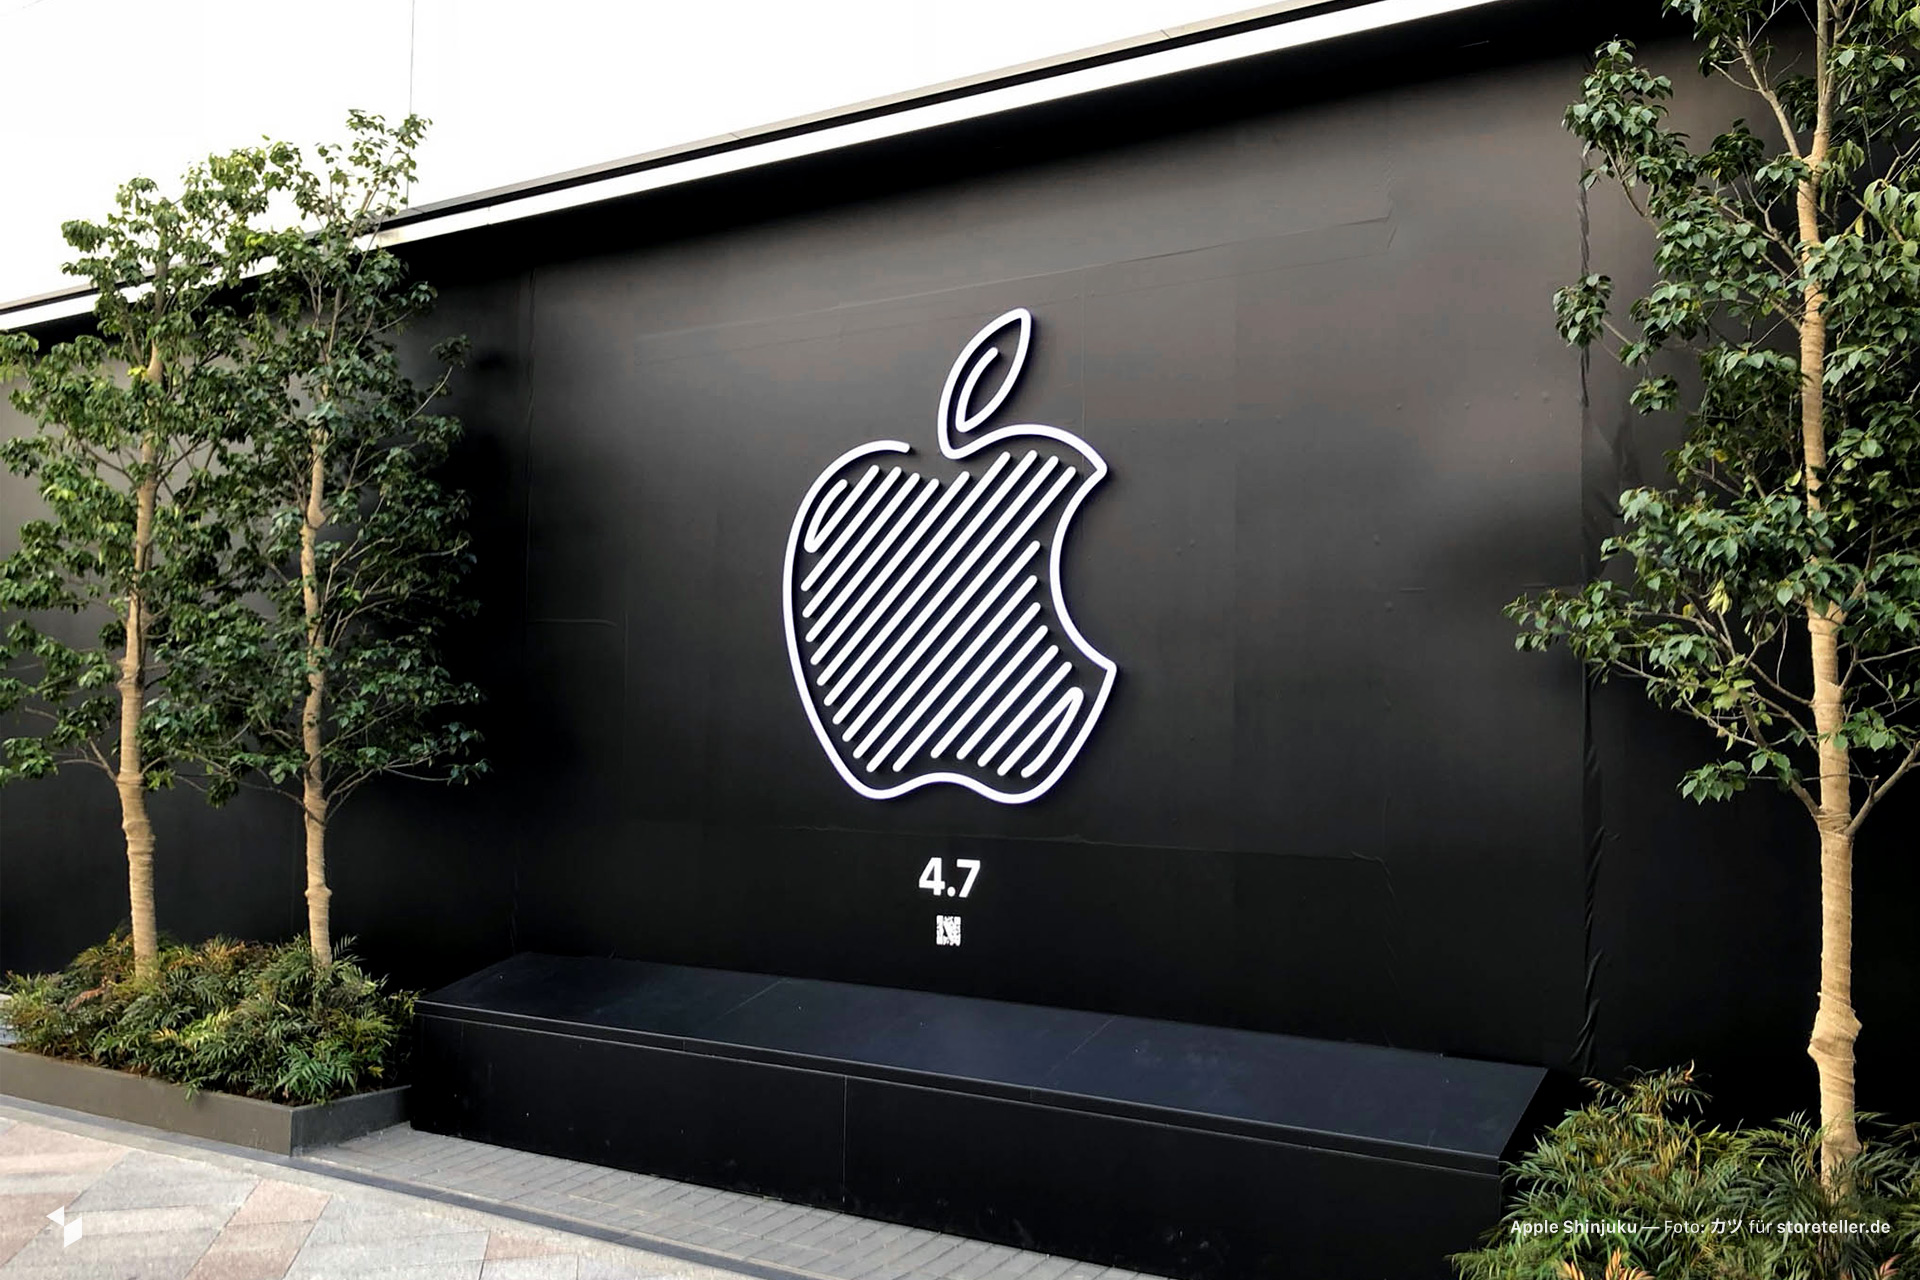 Neonreklame: Das Ankündigungsmotiv von Apple Shinjuku in Tokio (Japan)